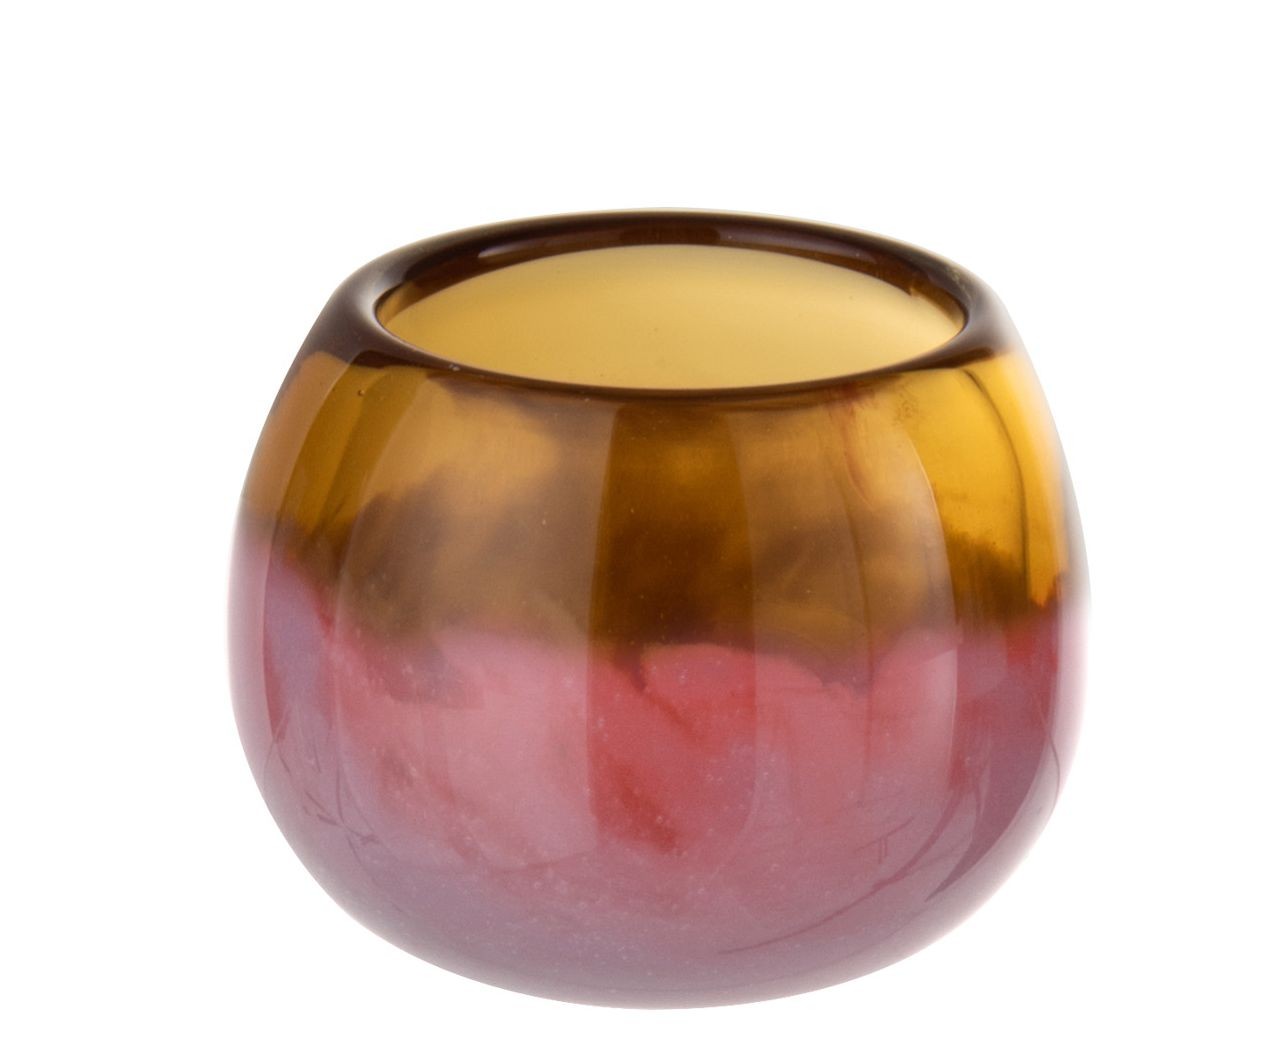 Okrovo-růžová skleněná váza Vana ball - Ø8*7 cm J-Line by Jolipa